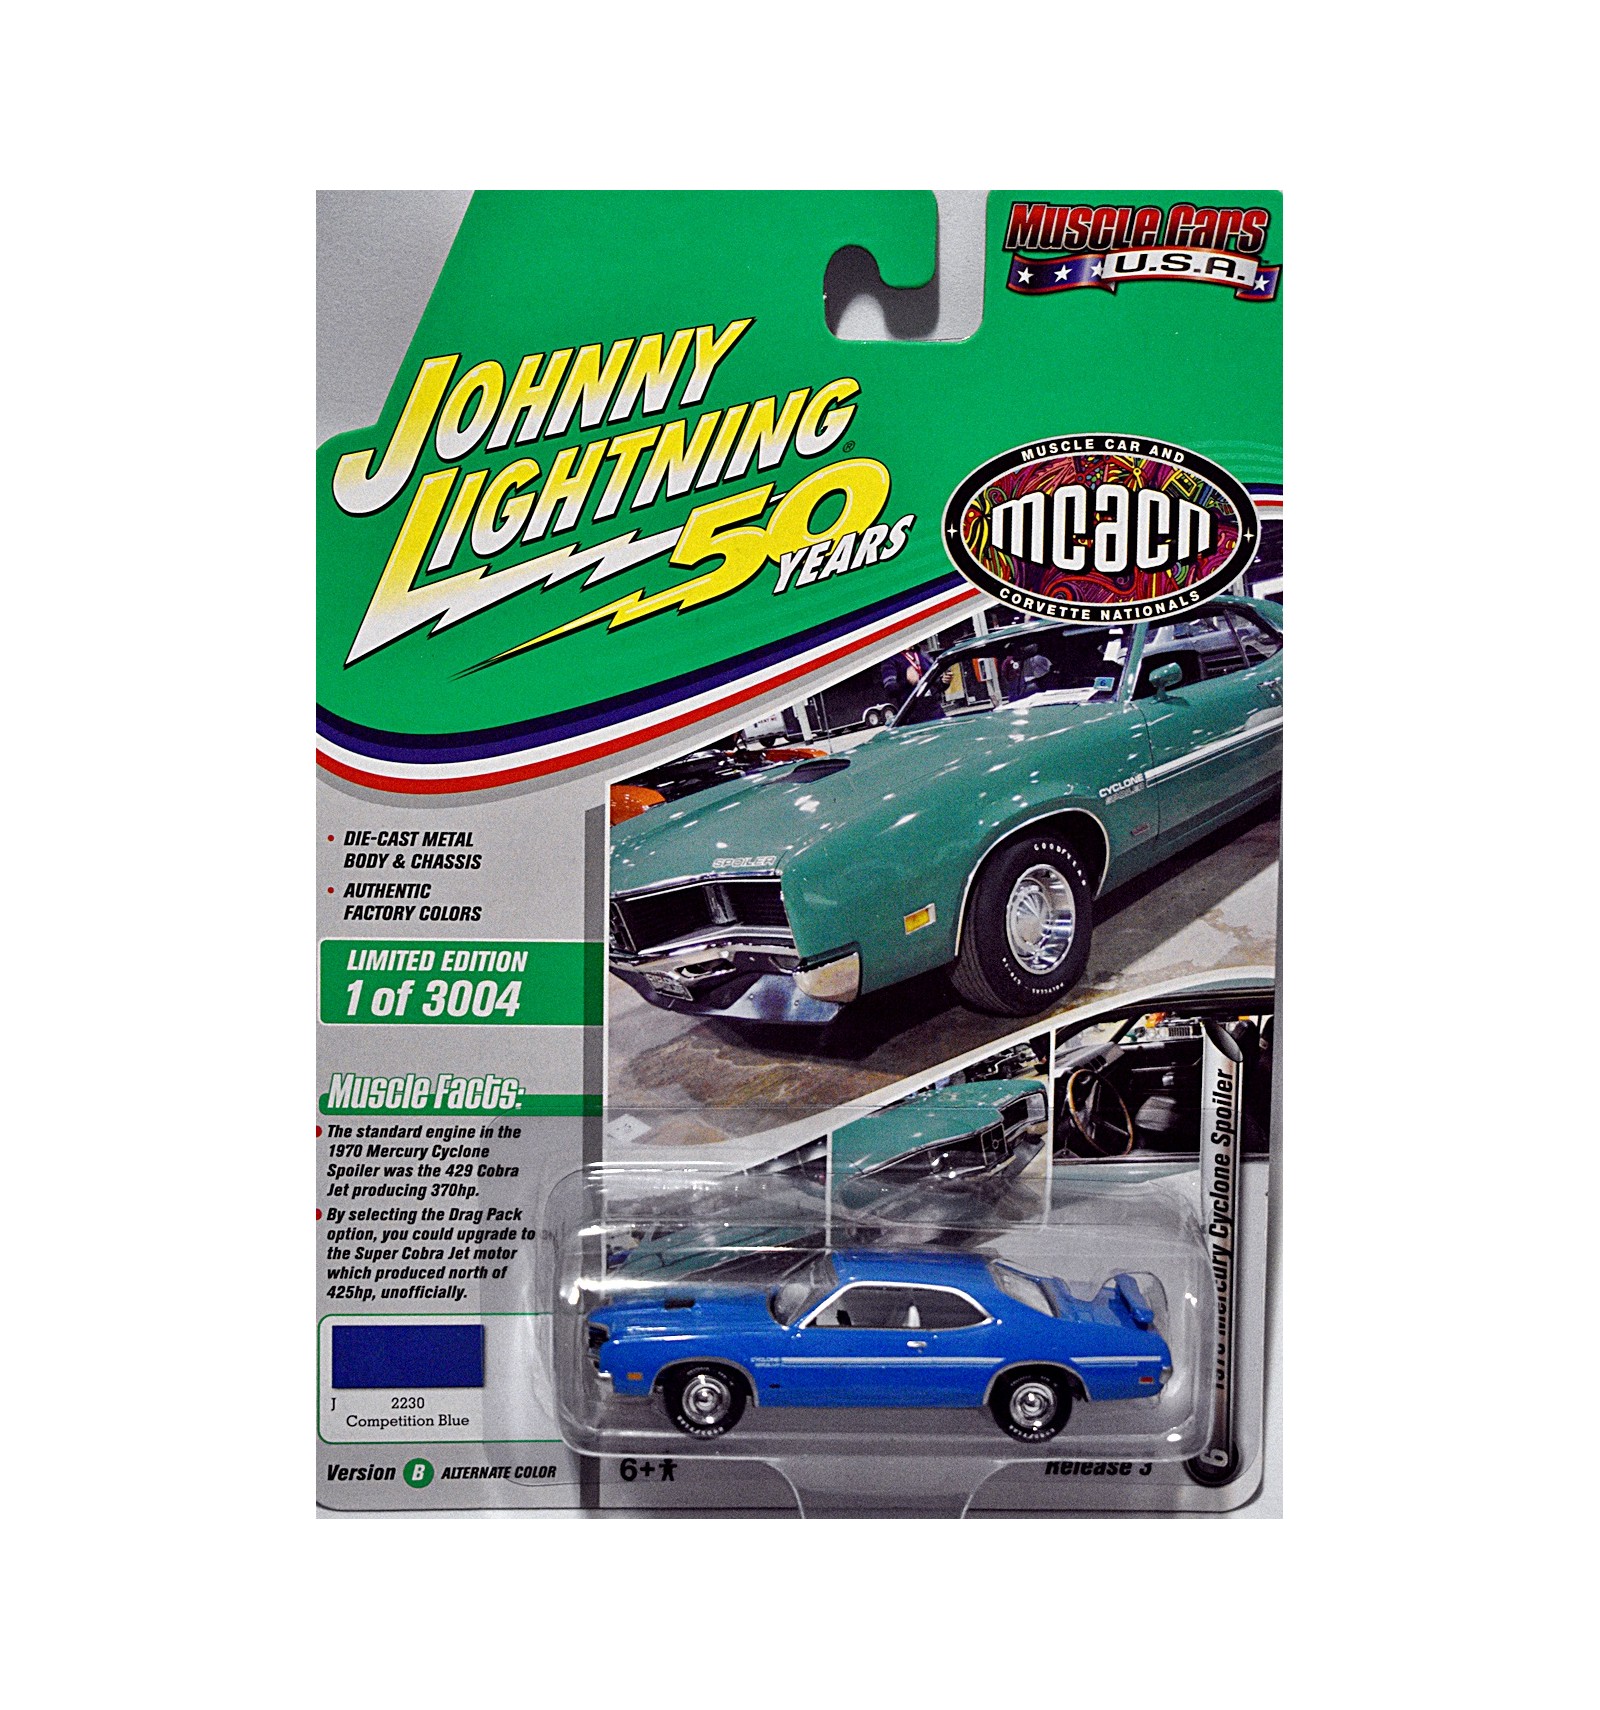 Johnny lightning muscle cars usa 1970 mercury cyclone spoiler ng114